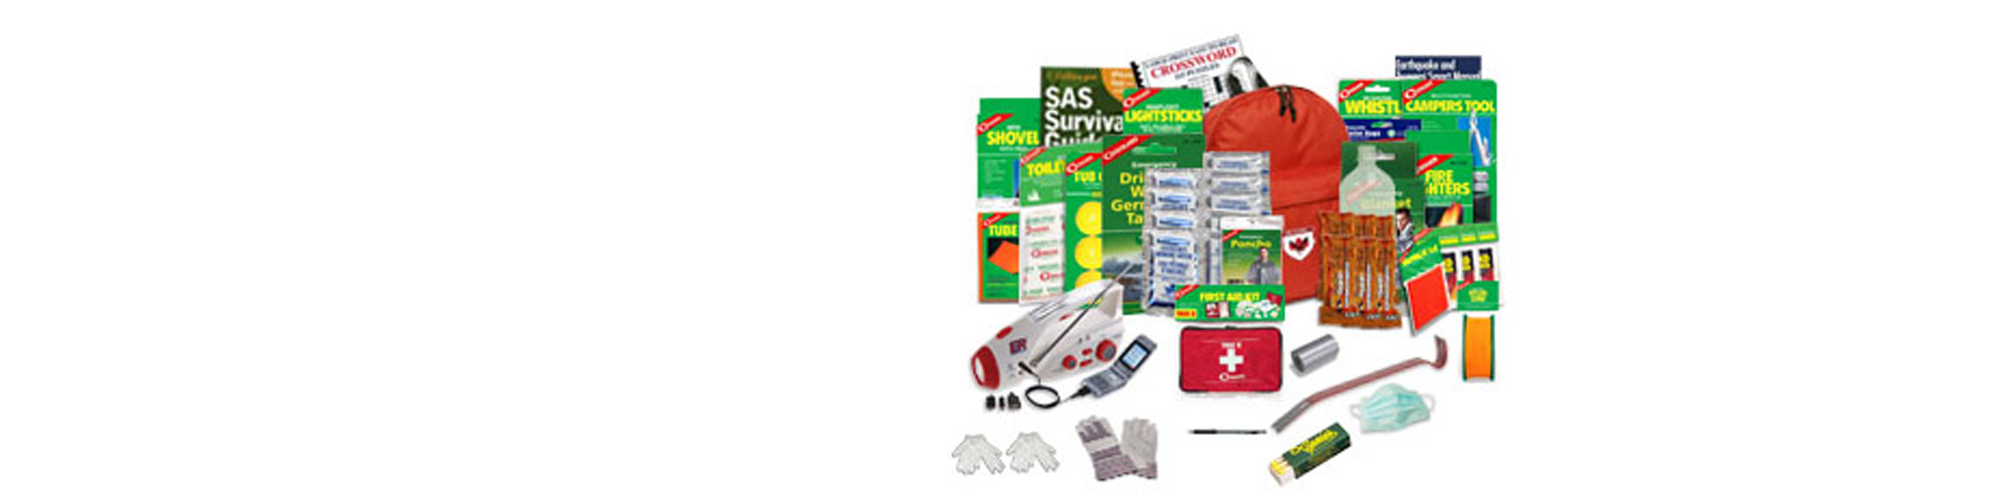 RedHawk Survival Kits